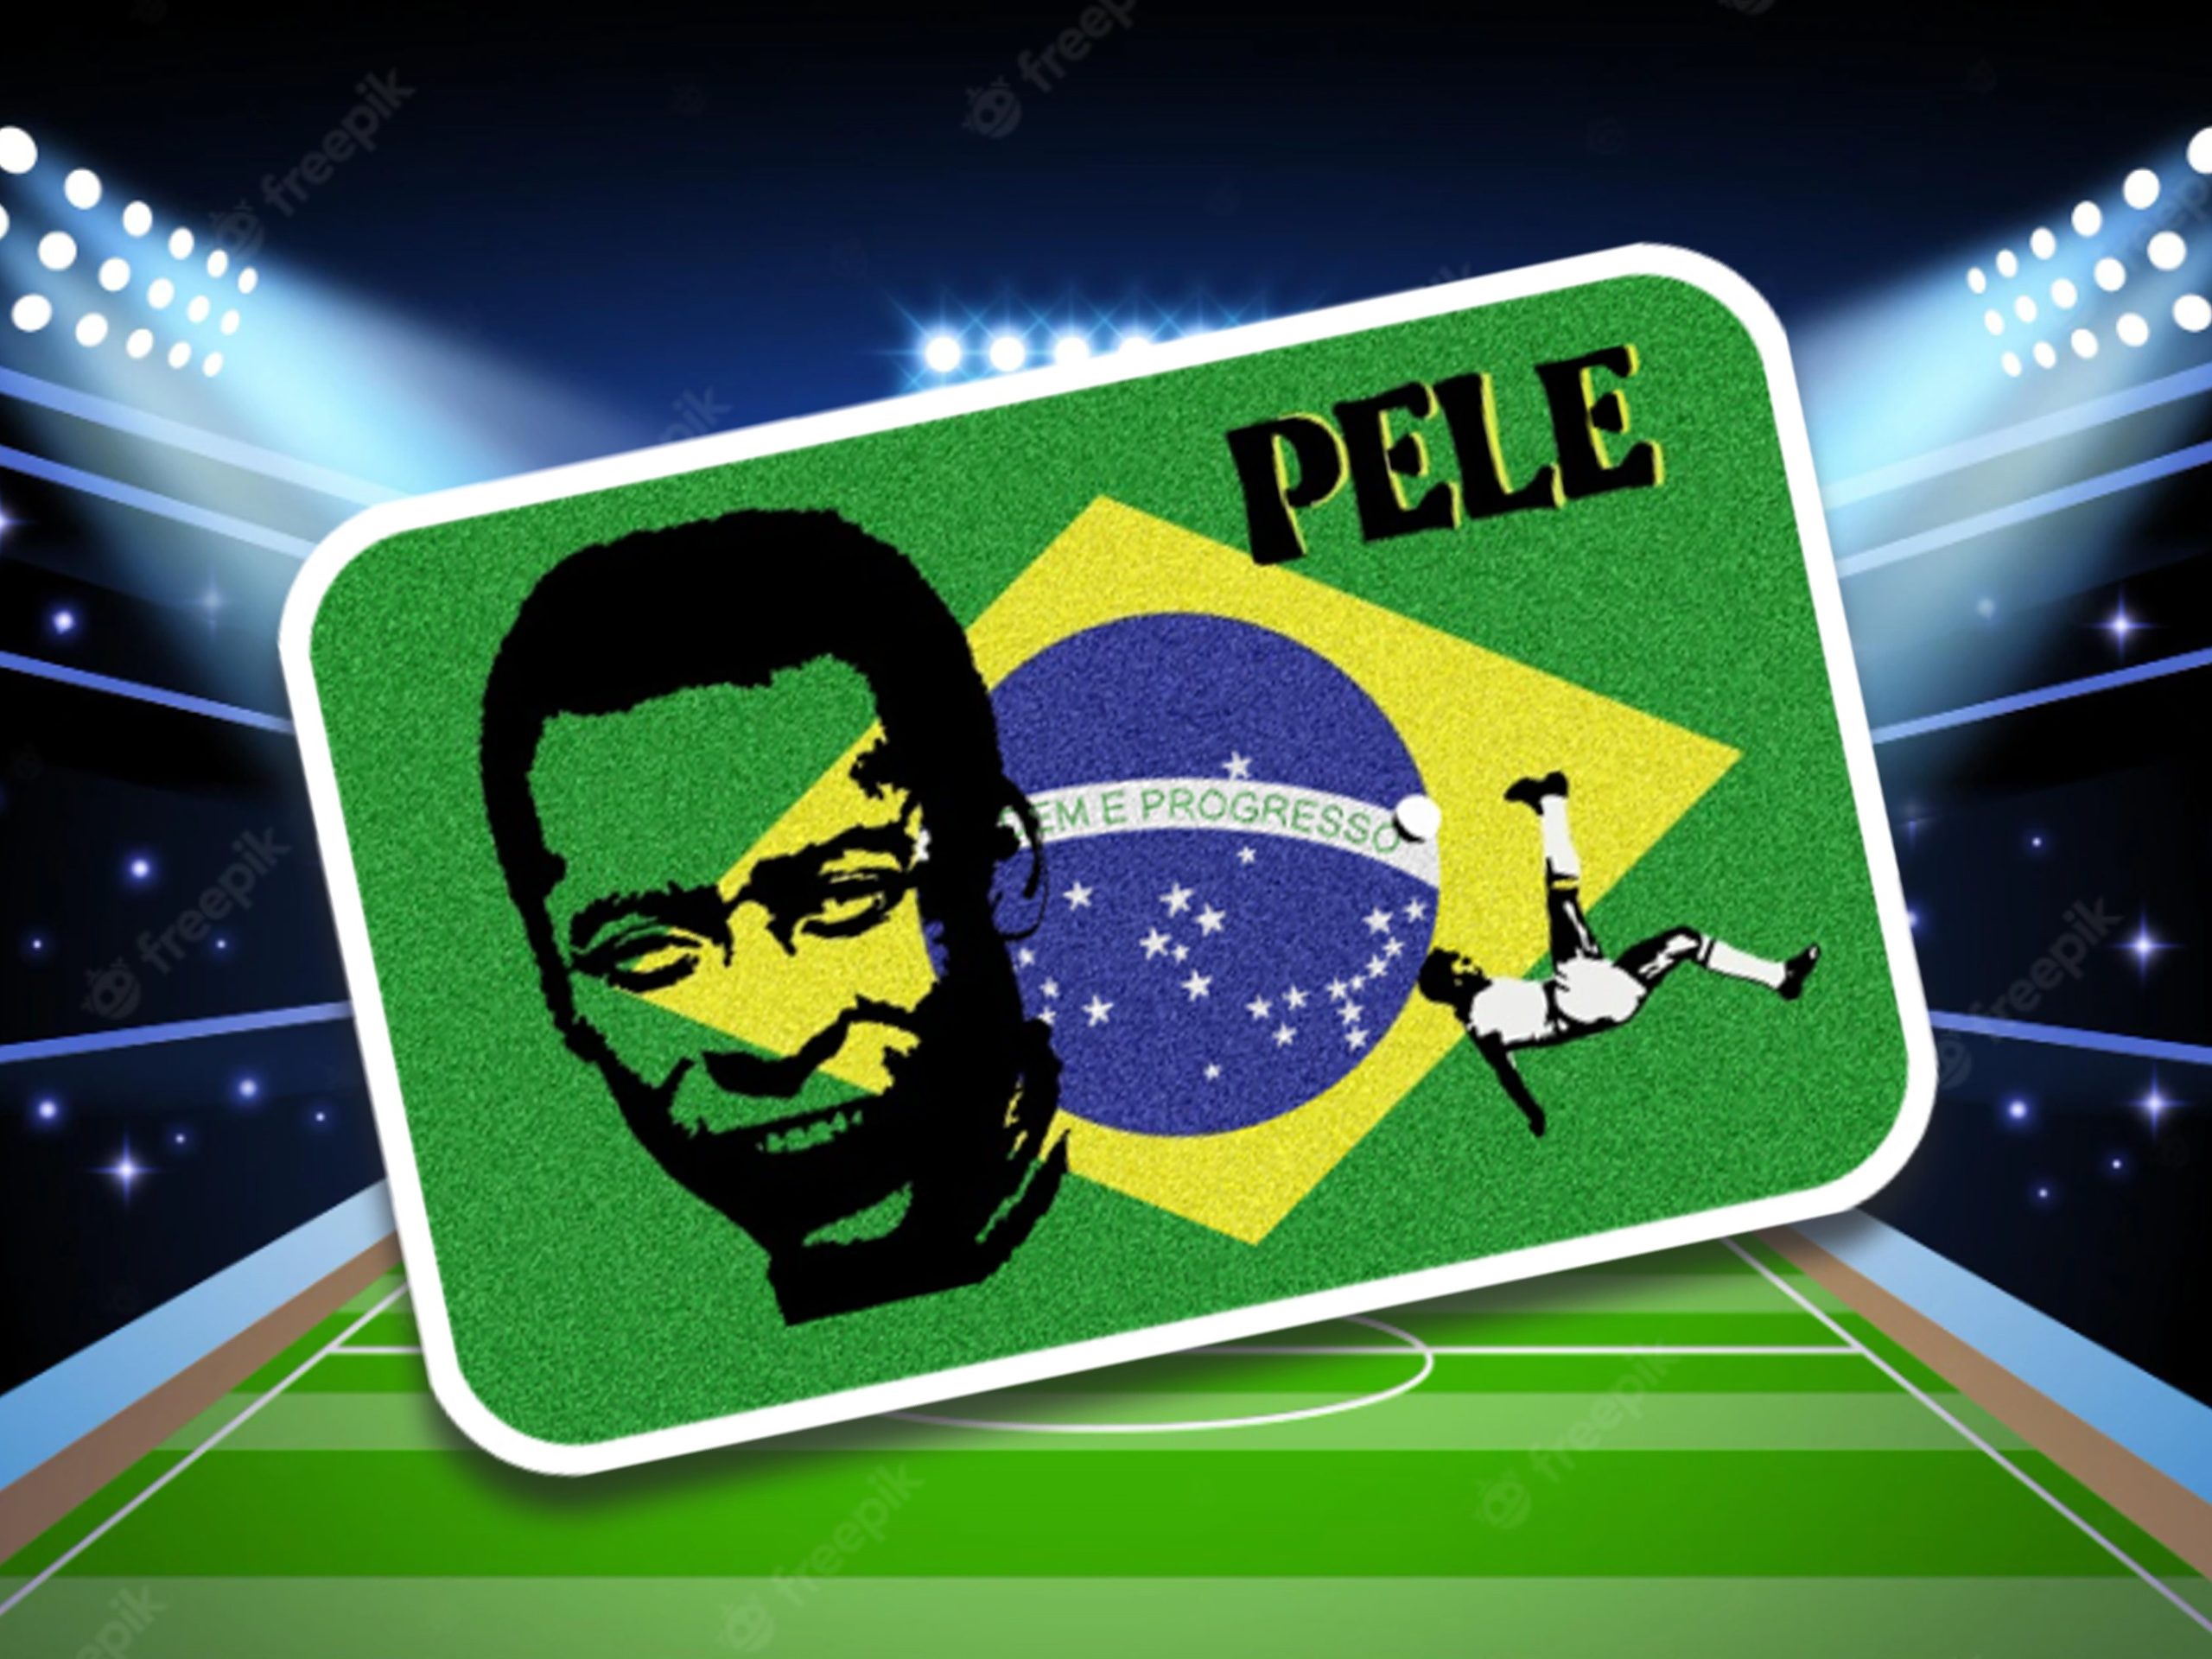 Tribute to Pele Sticker